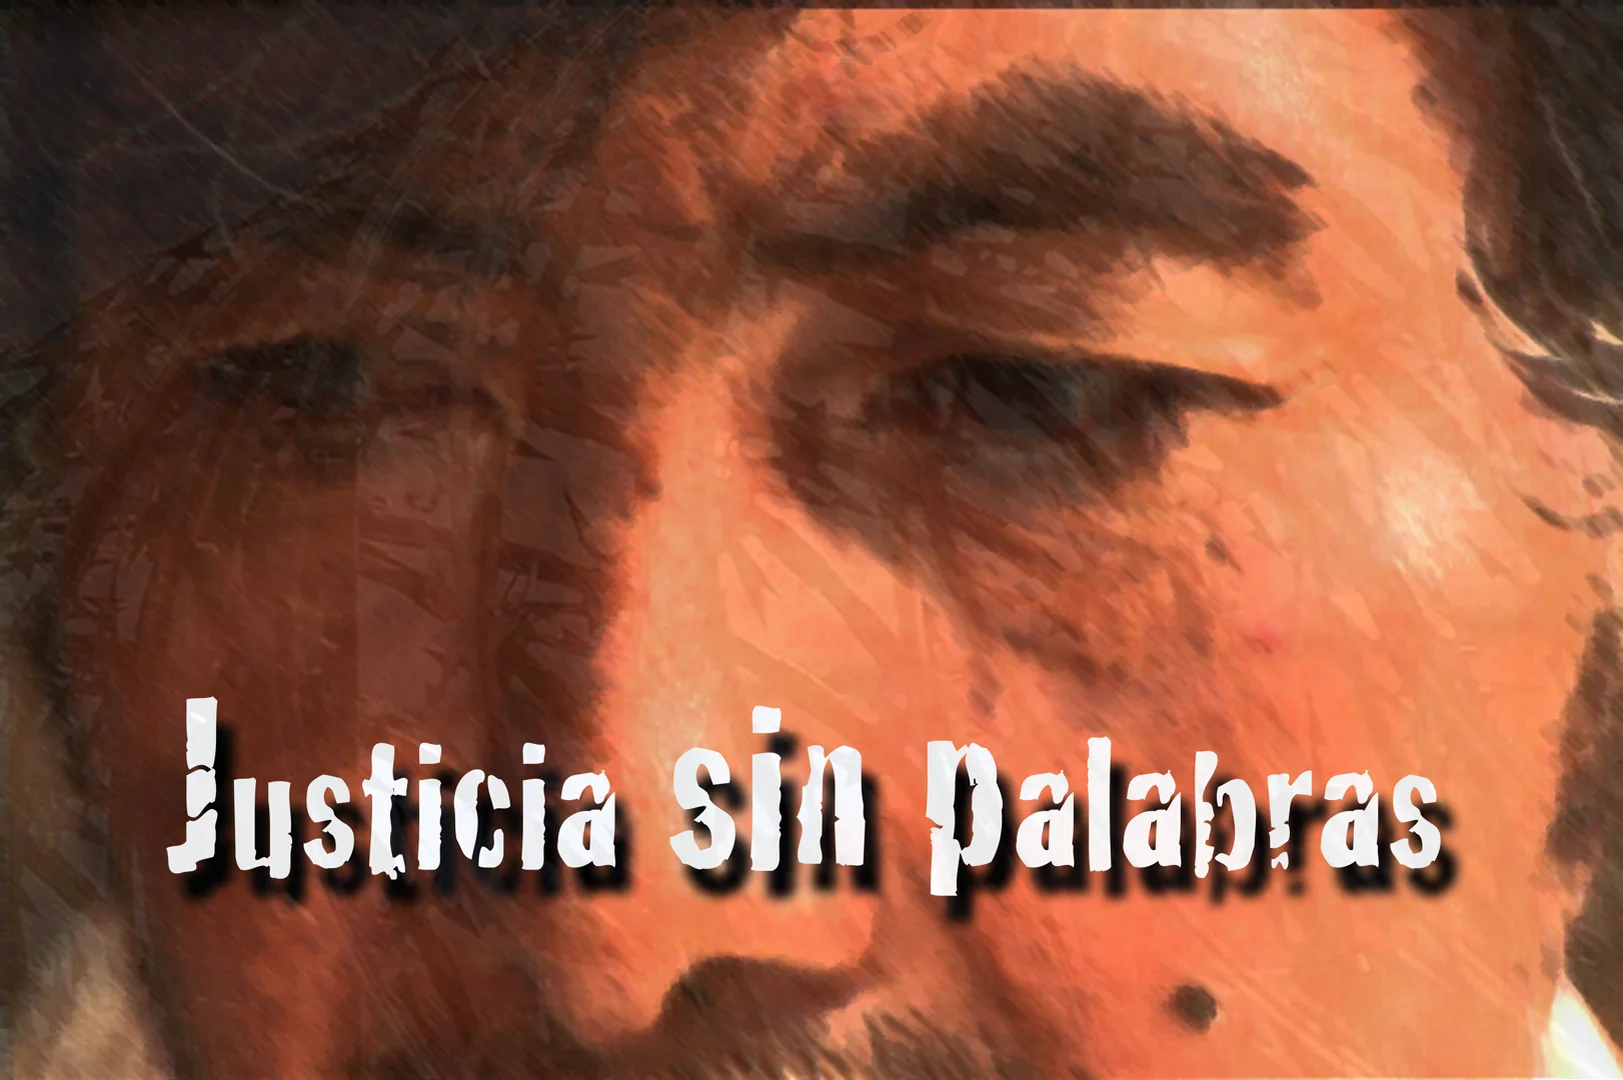 Justicia sin palabras on Vimeo